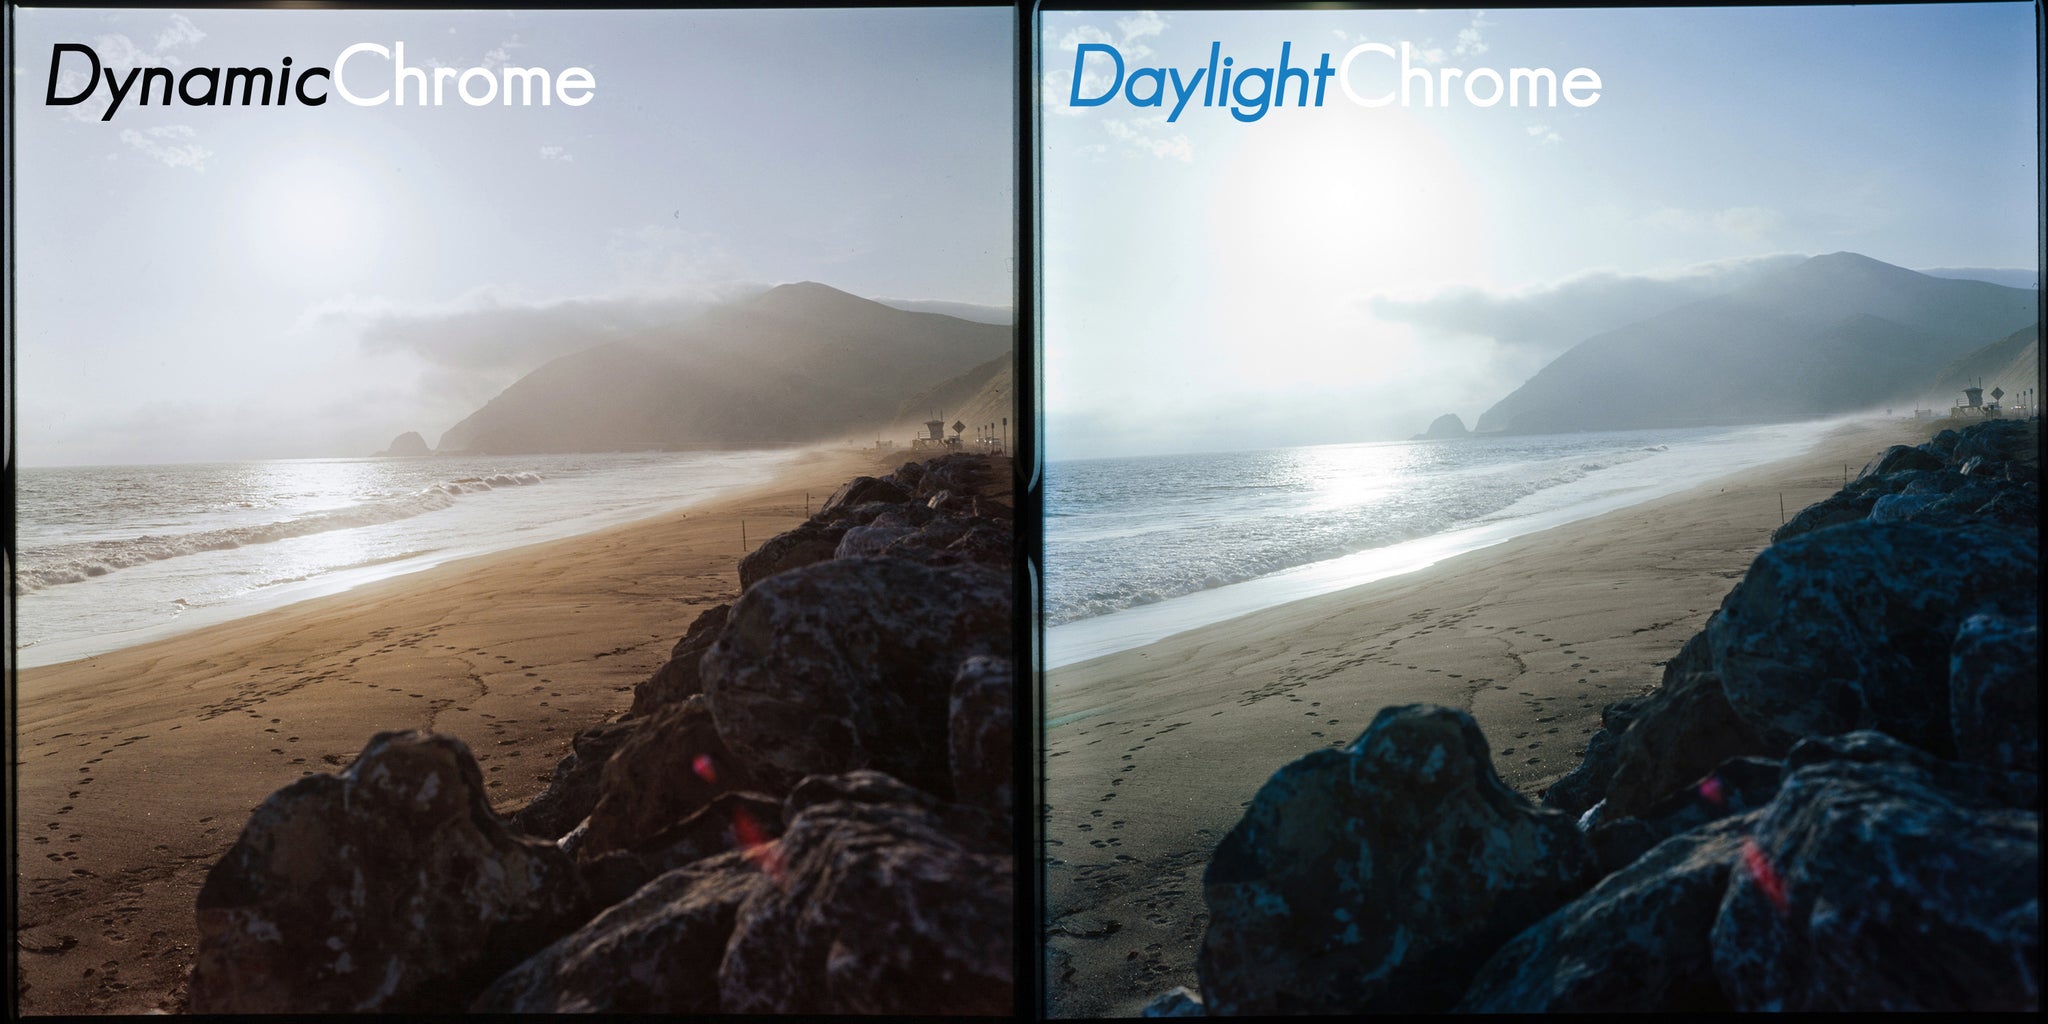 D9 DynamicChrome 1st Developer compared to traditional D6 DaylightChrome (E6)